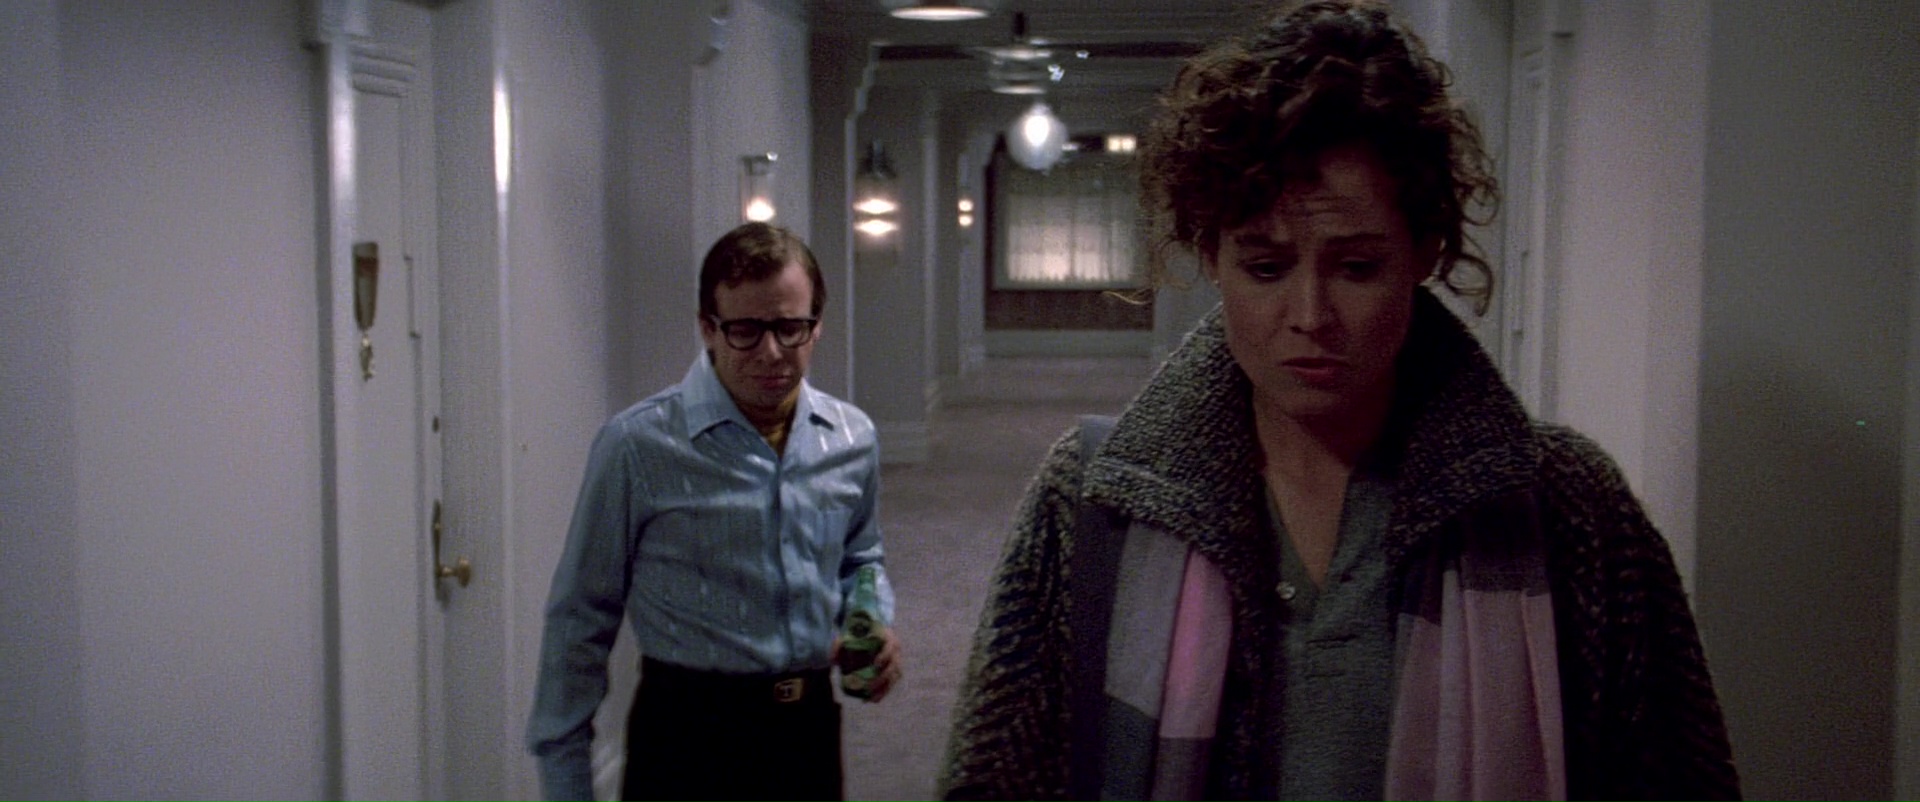 Perrier Water and Rick Moranis in Ghostbusters (1984) Movie1920 x 802